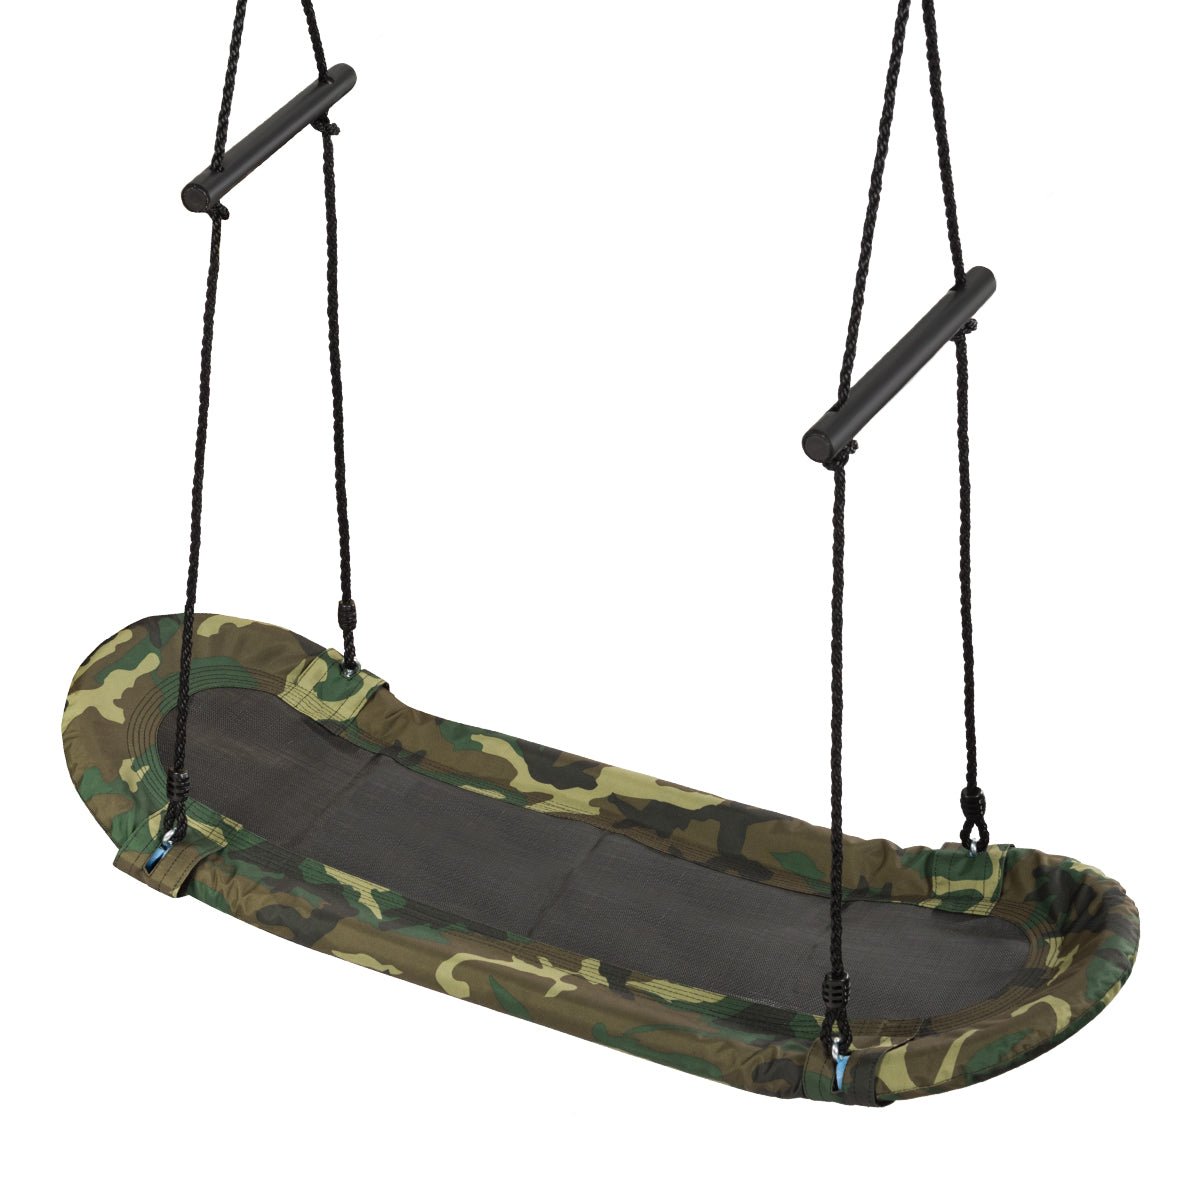 Adjustable Height Platform Swing: Soft Handles for Fun and Comfort